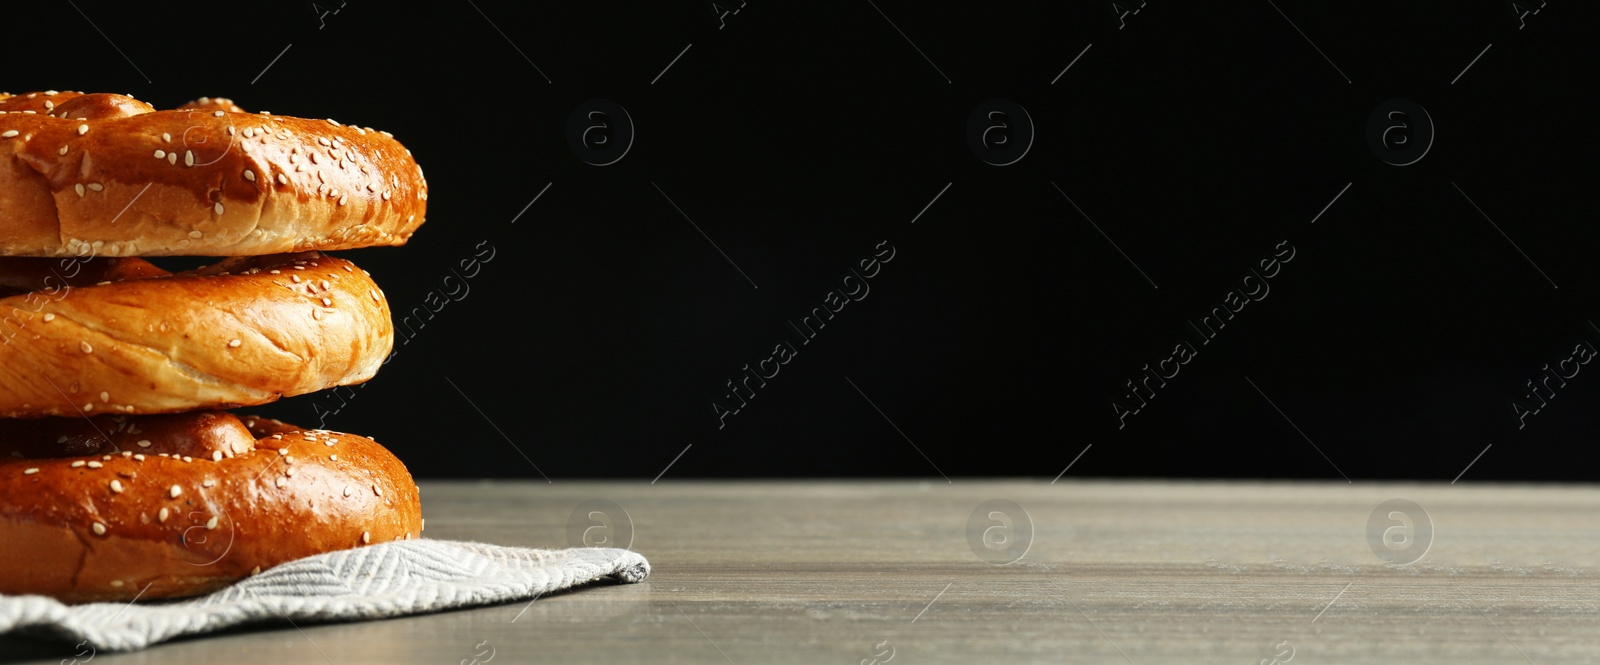 Image of Tasty freshly baked pretzels on wooden table against black background, space for text. Banner design